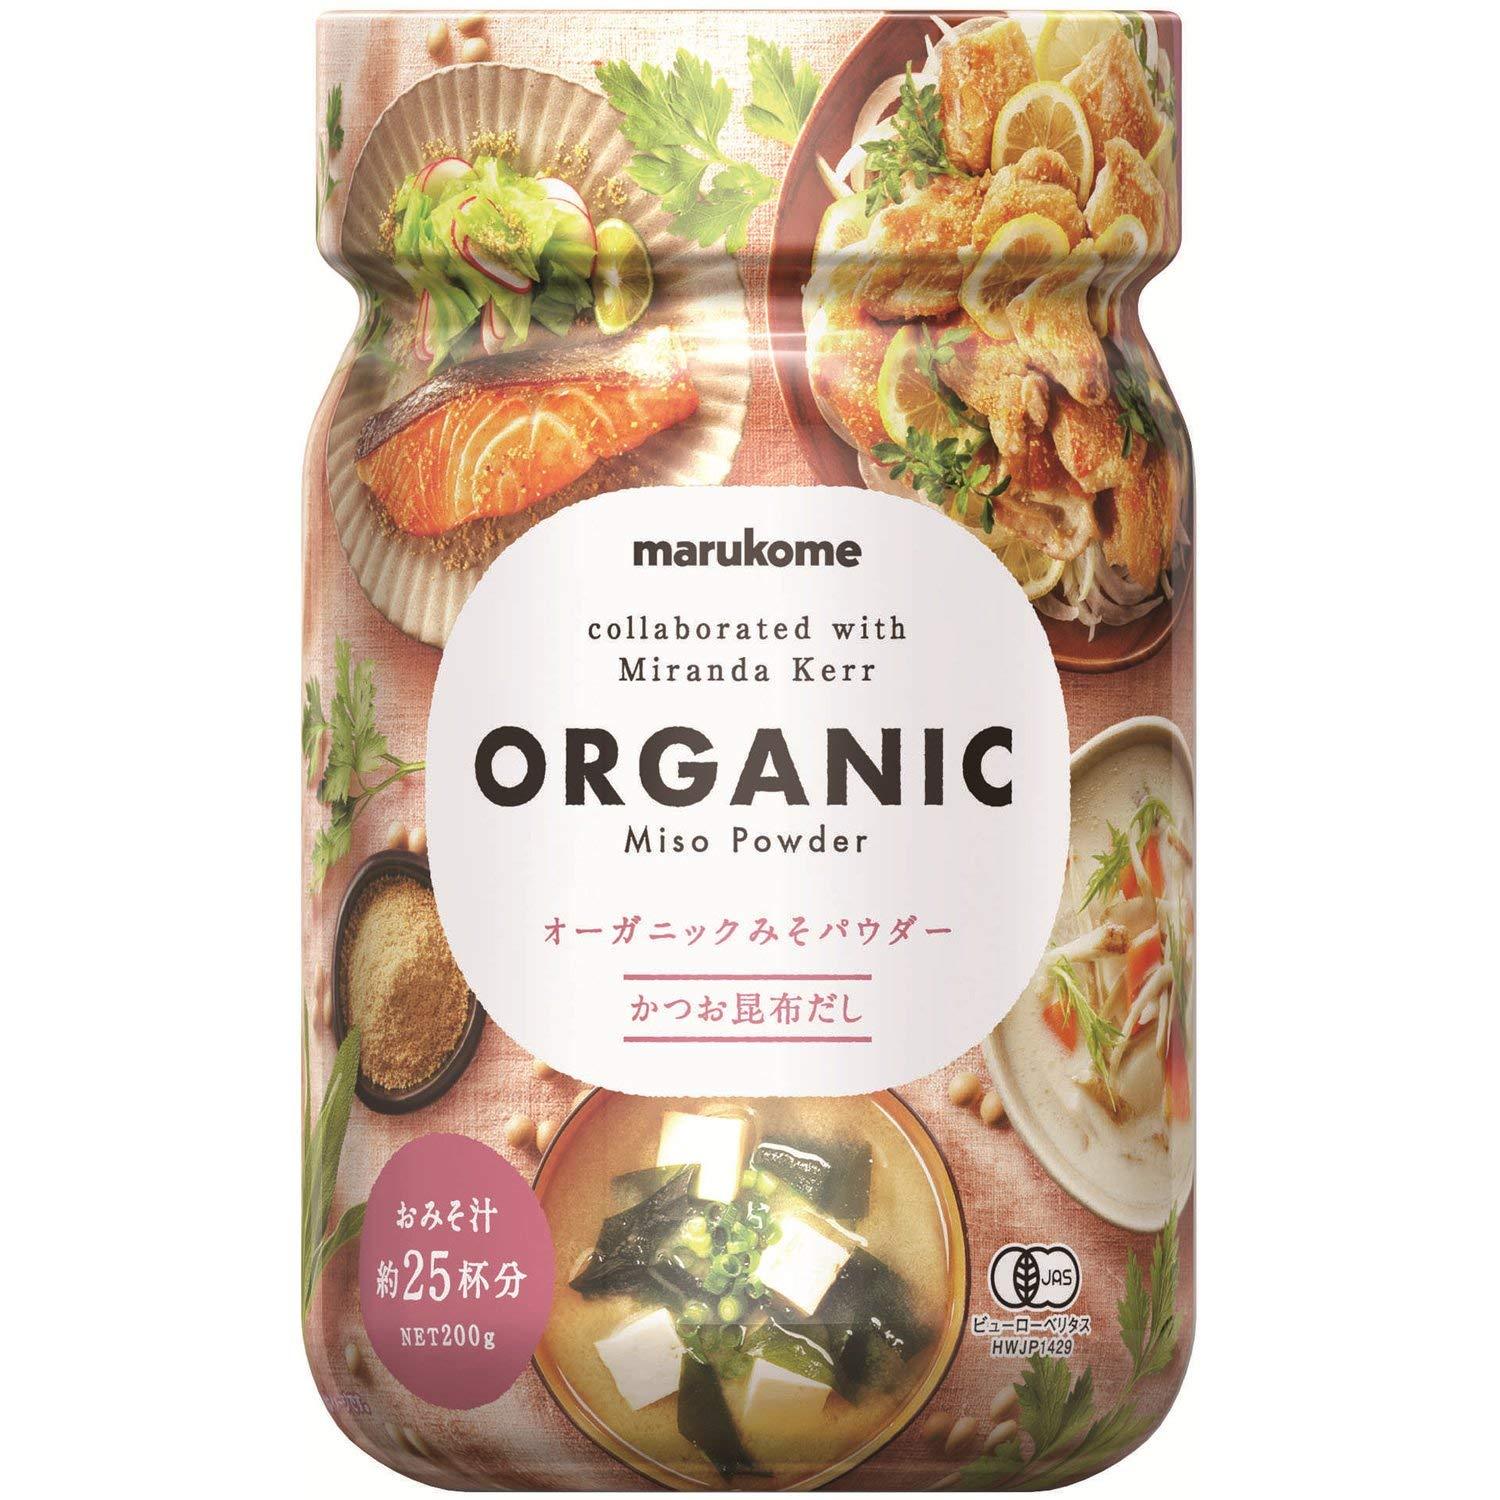 Marukome Organic Miso Powder with Bonito and Kelp Dashi 200g, Japanese Taste